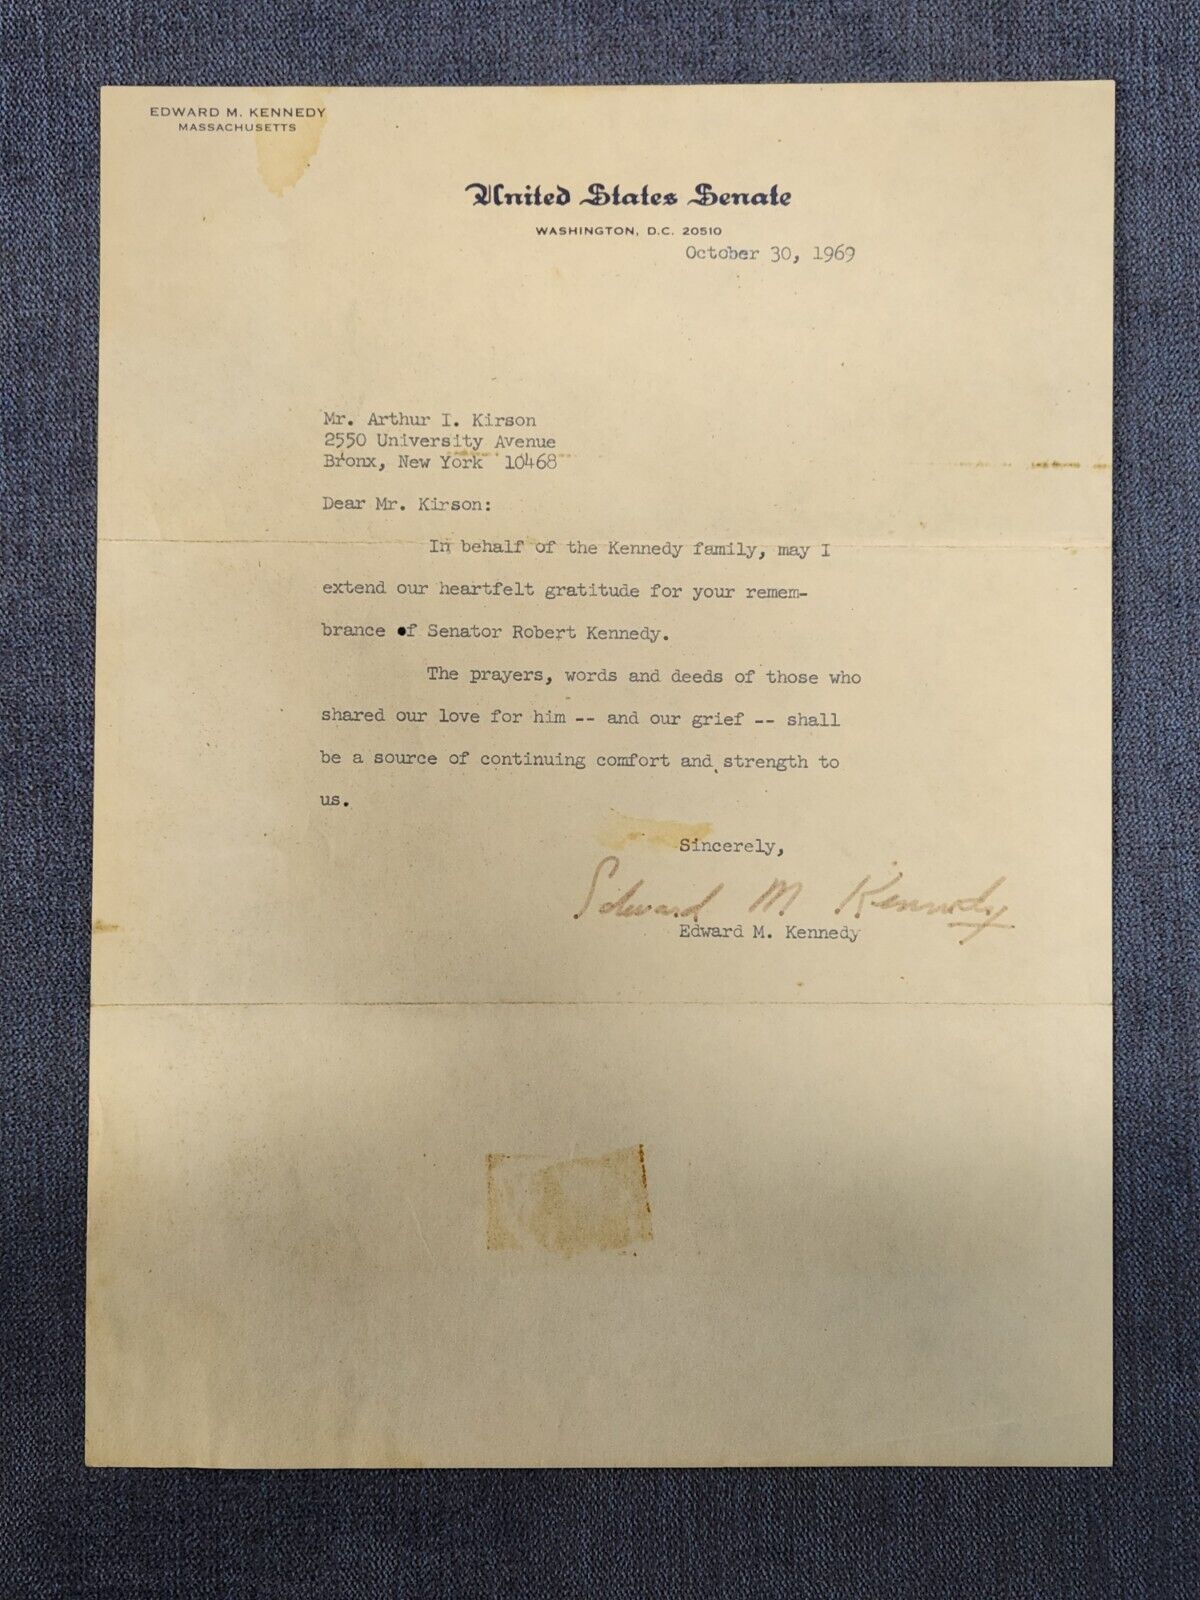 US Senator Edward M. Kennedy Hand Signed Letter US Senate 10/30/69  u-3E